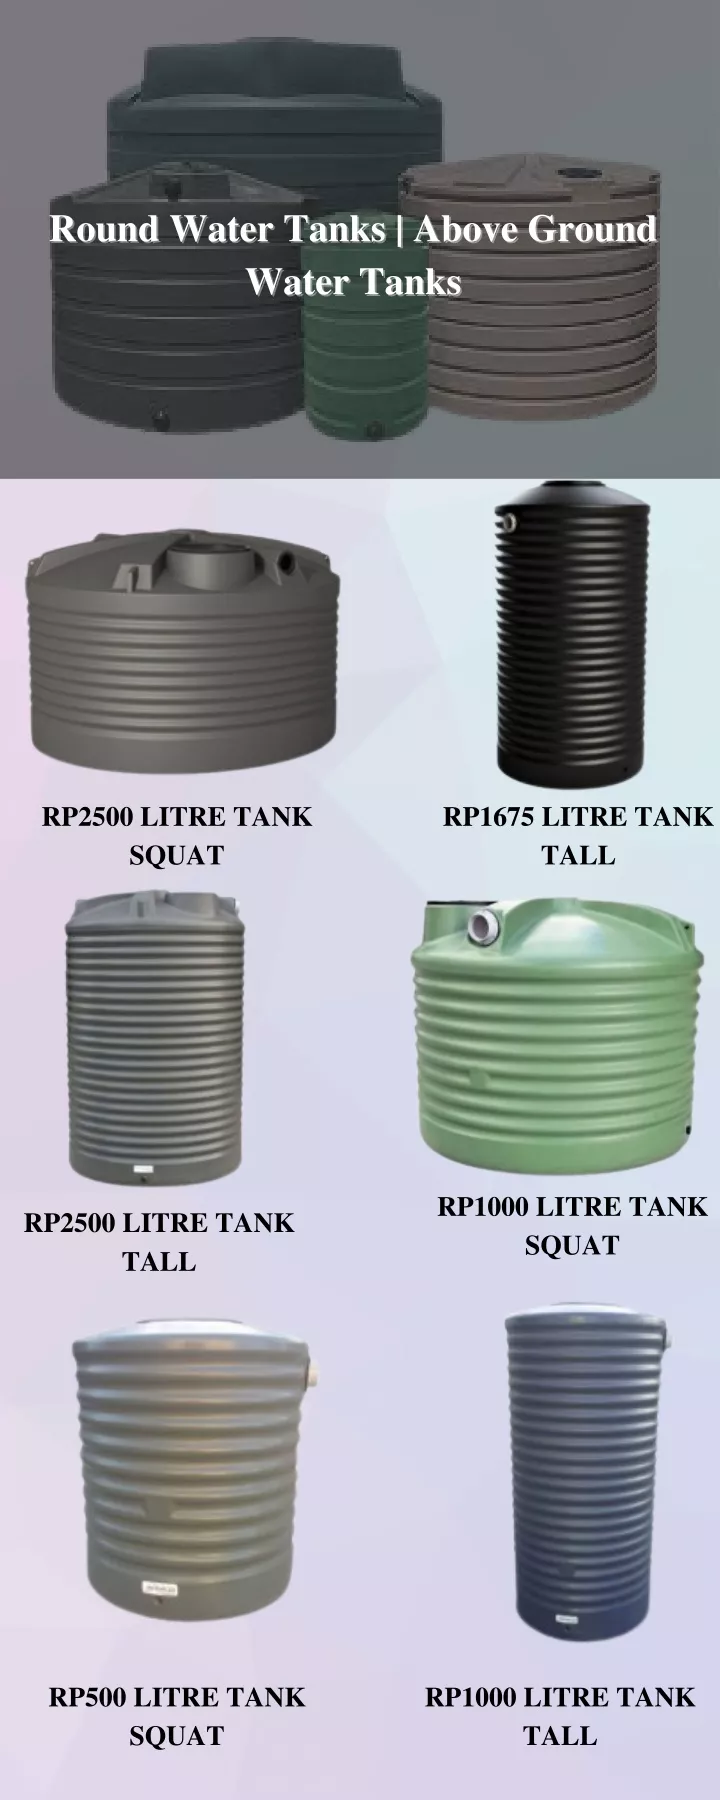 round water tanks above ground water tanks